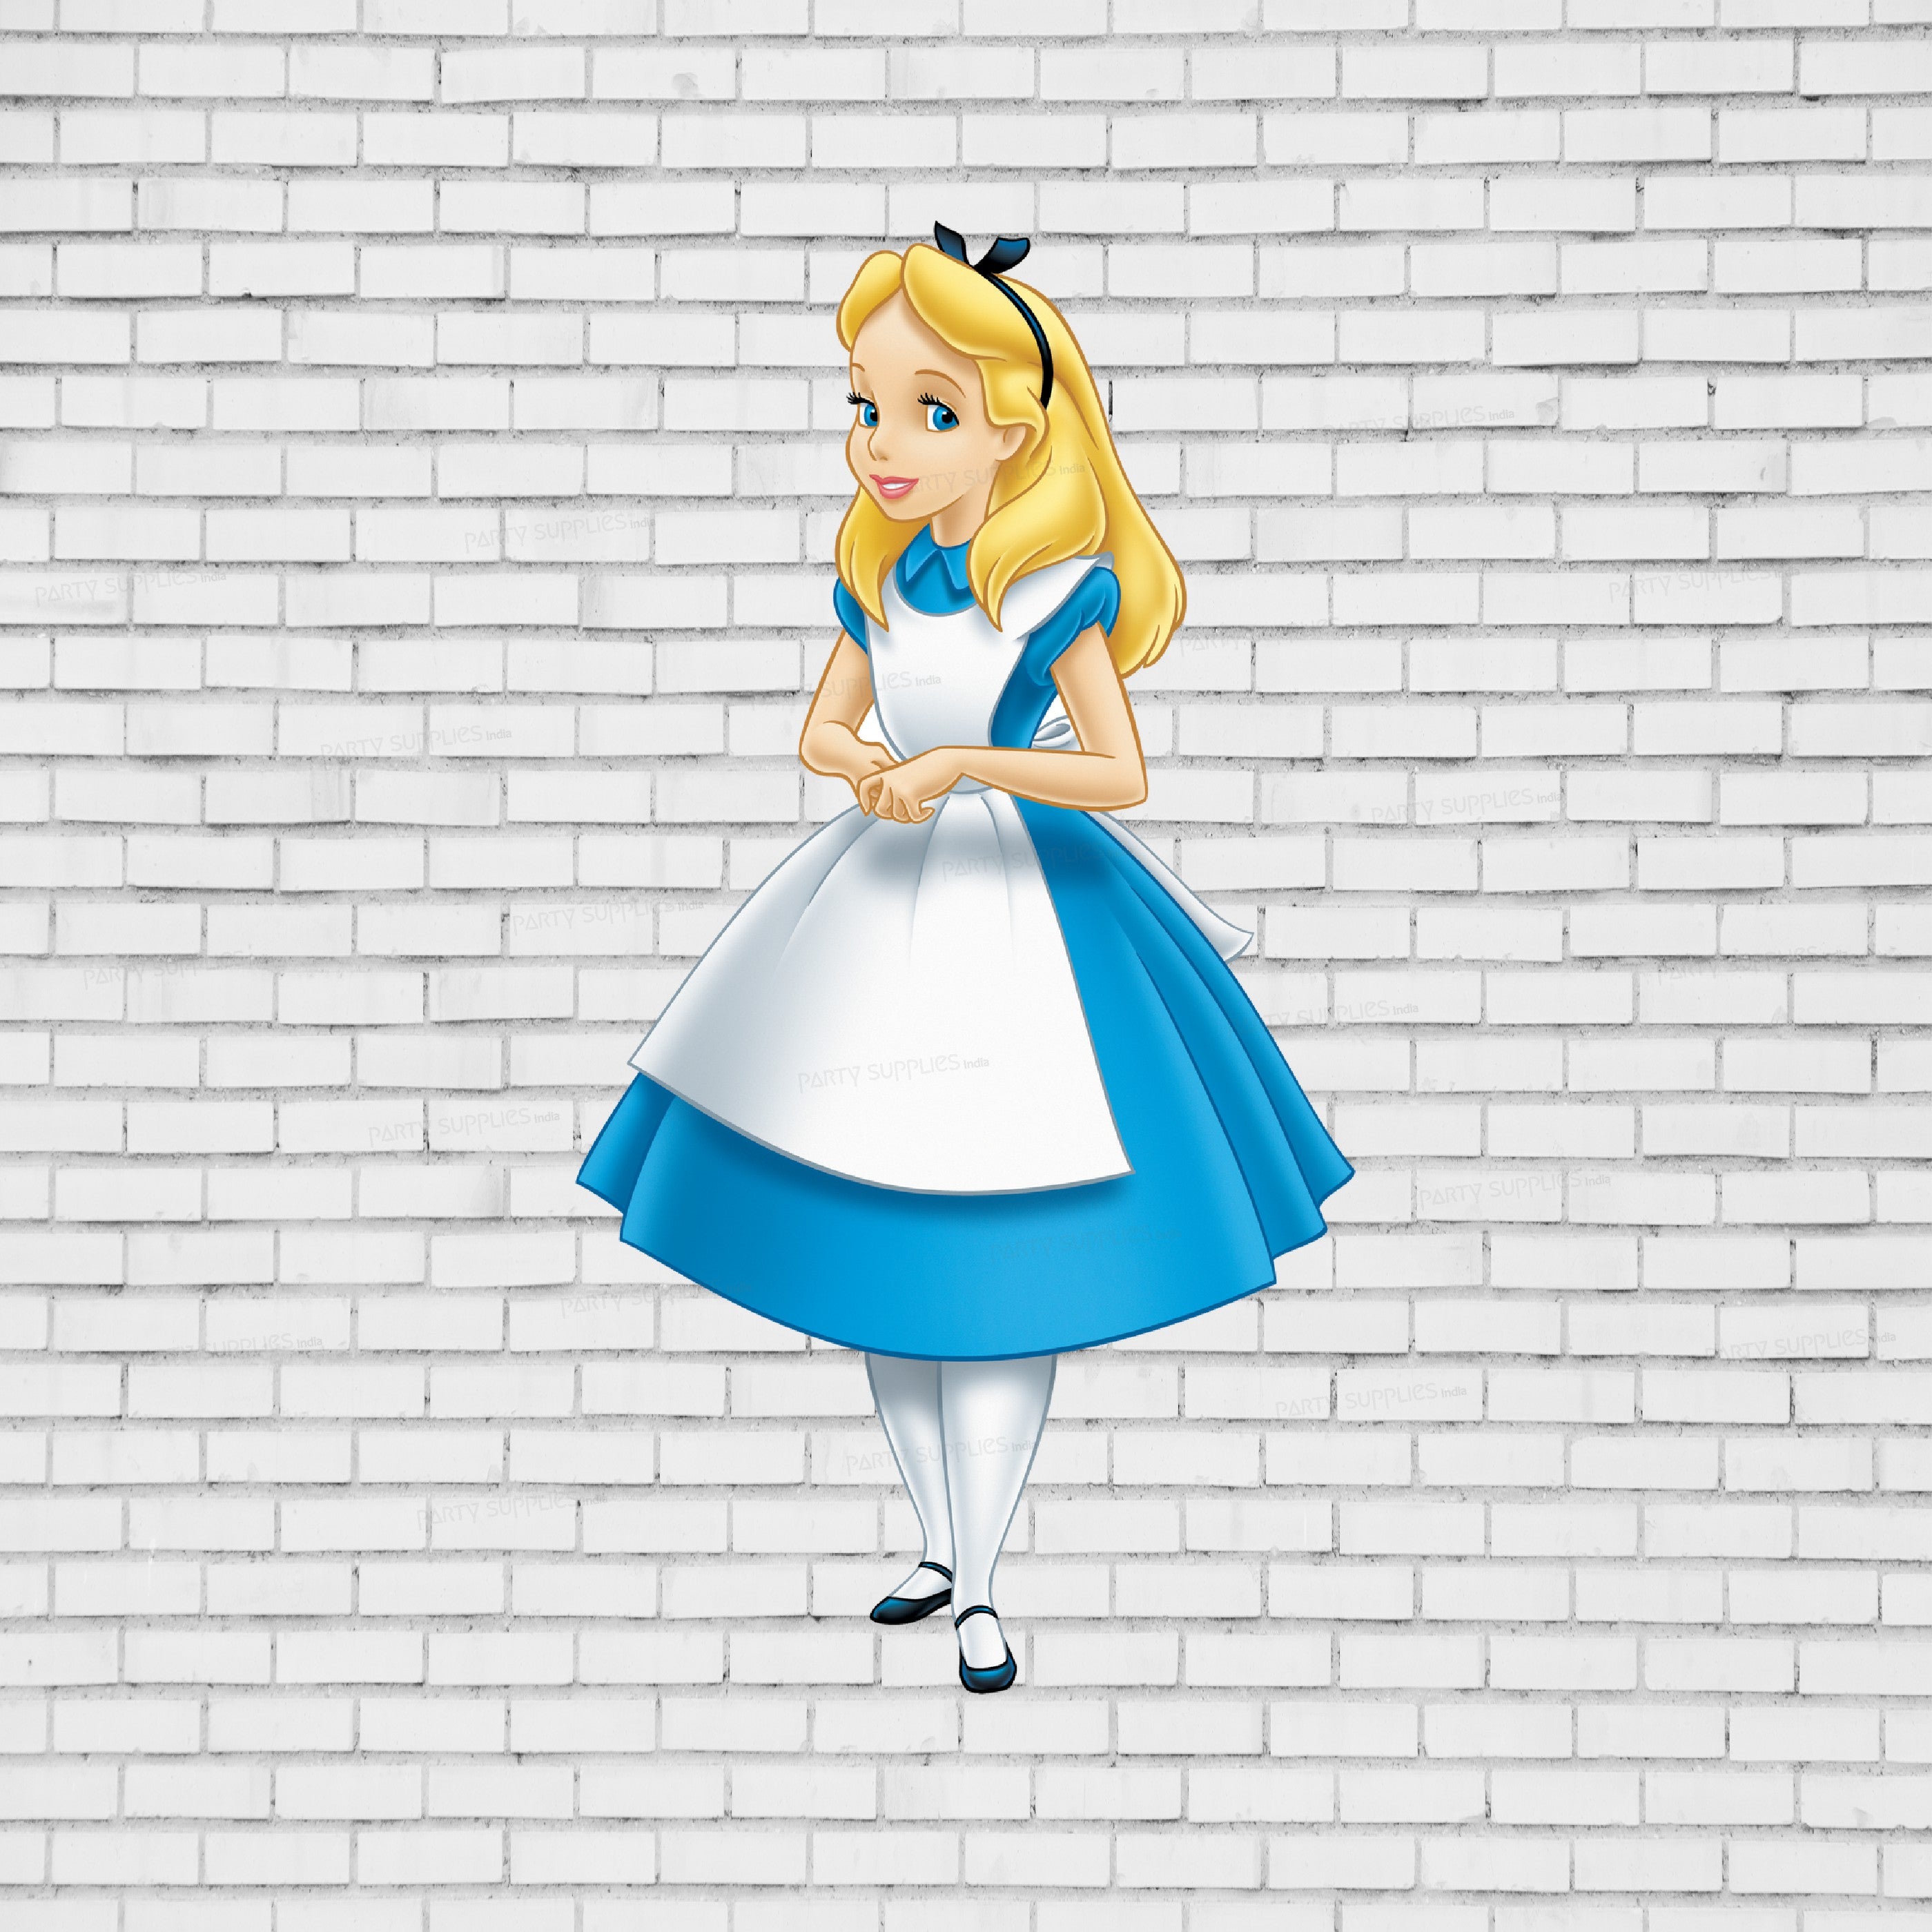 PSI Alice in Wonderland Cutout - 03